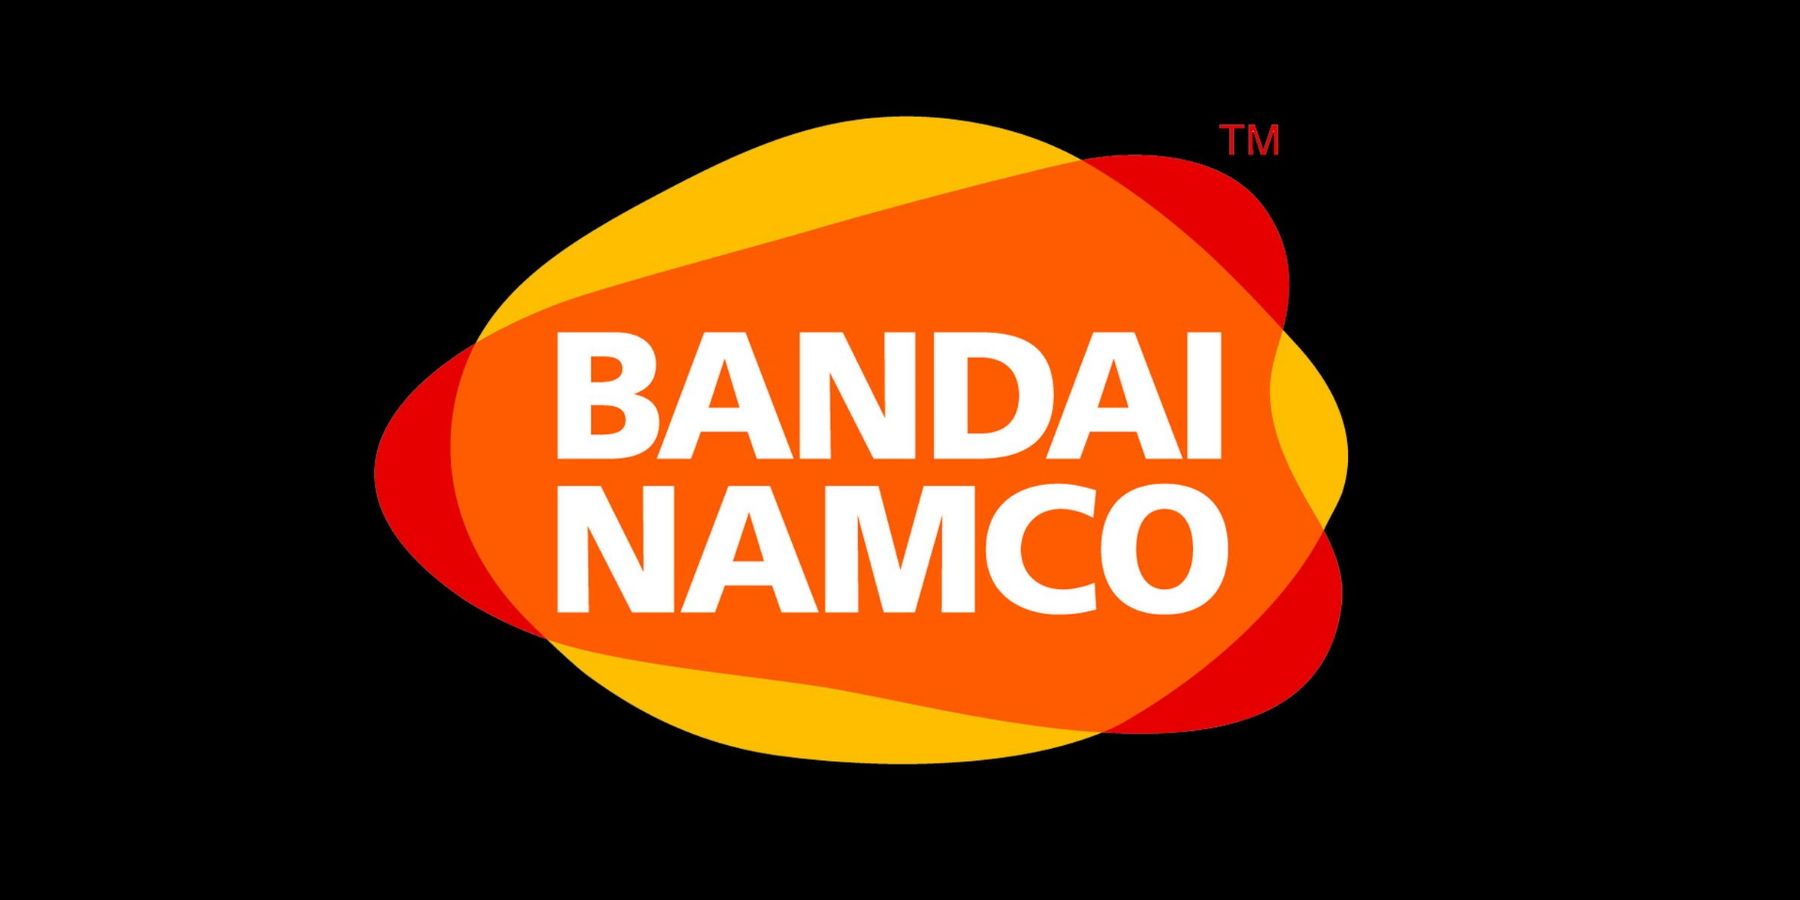 The Bandai Namco logo set against a black background